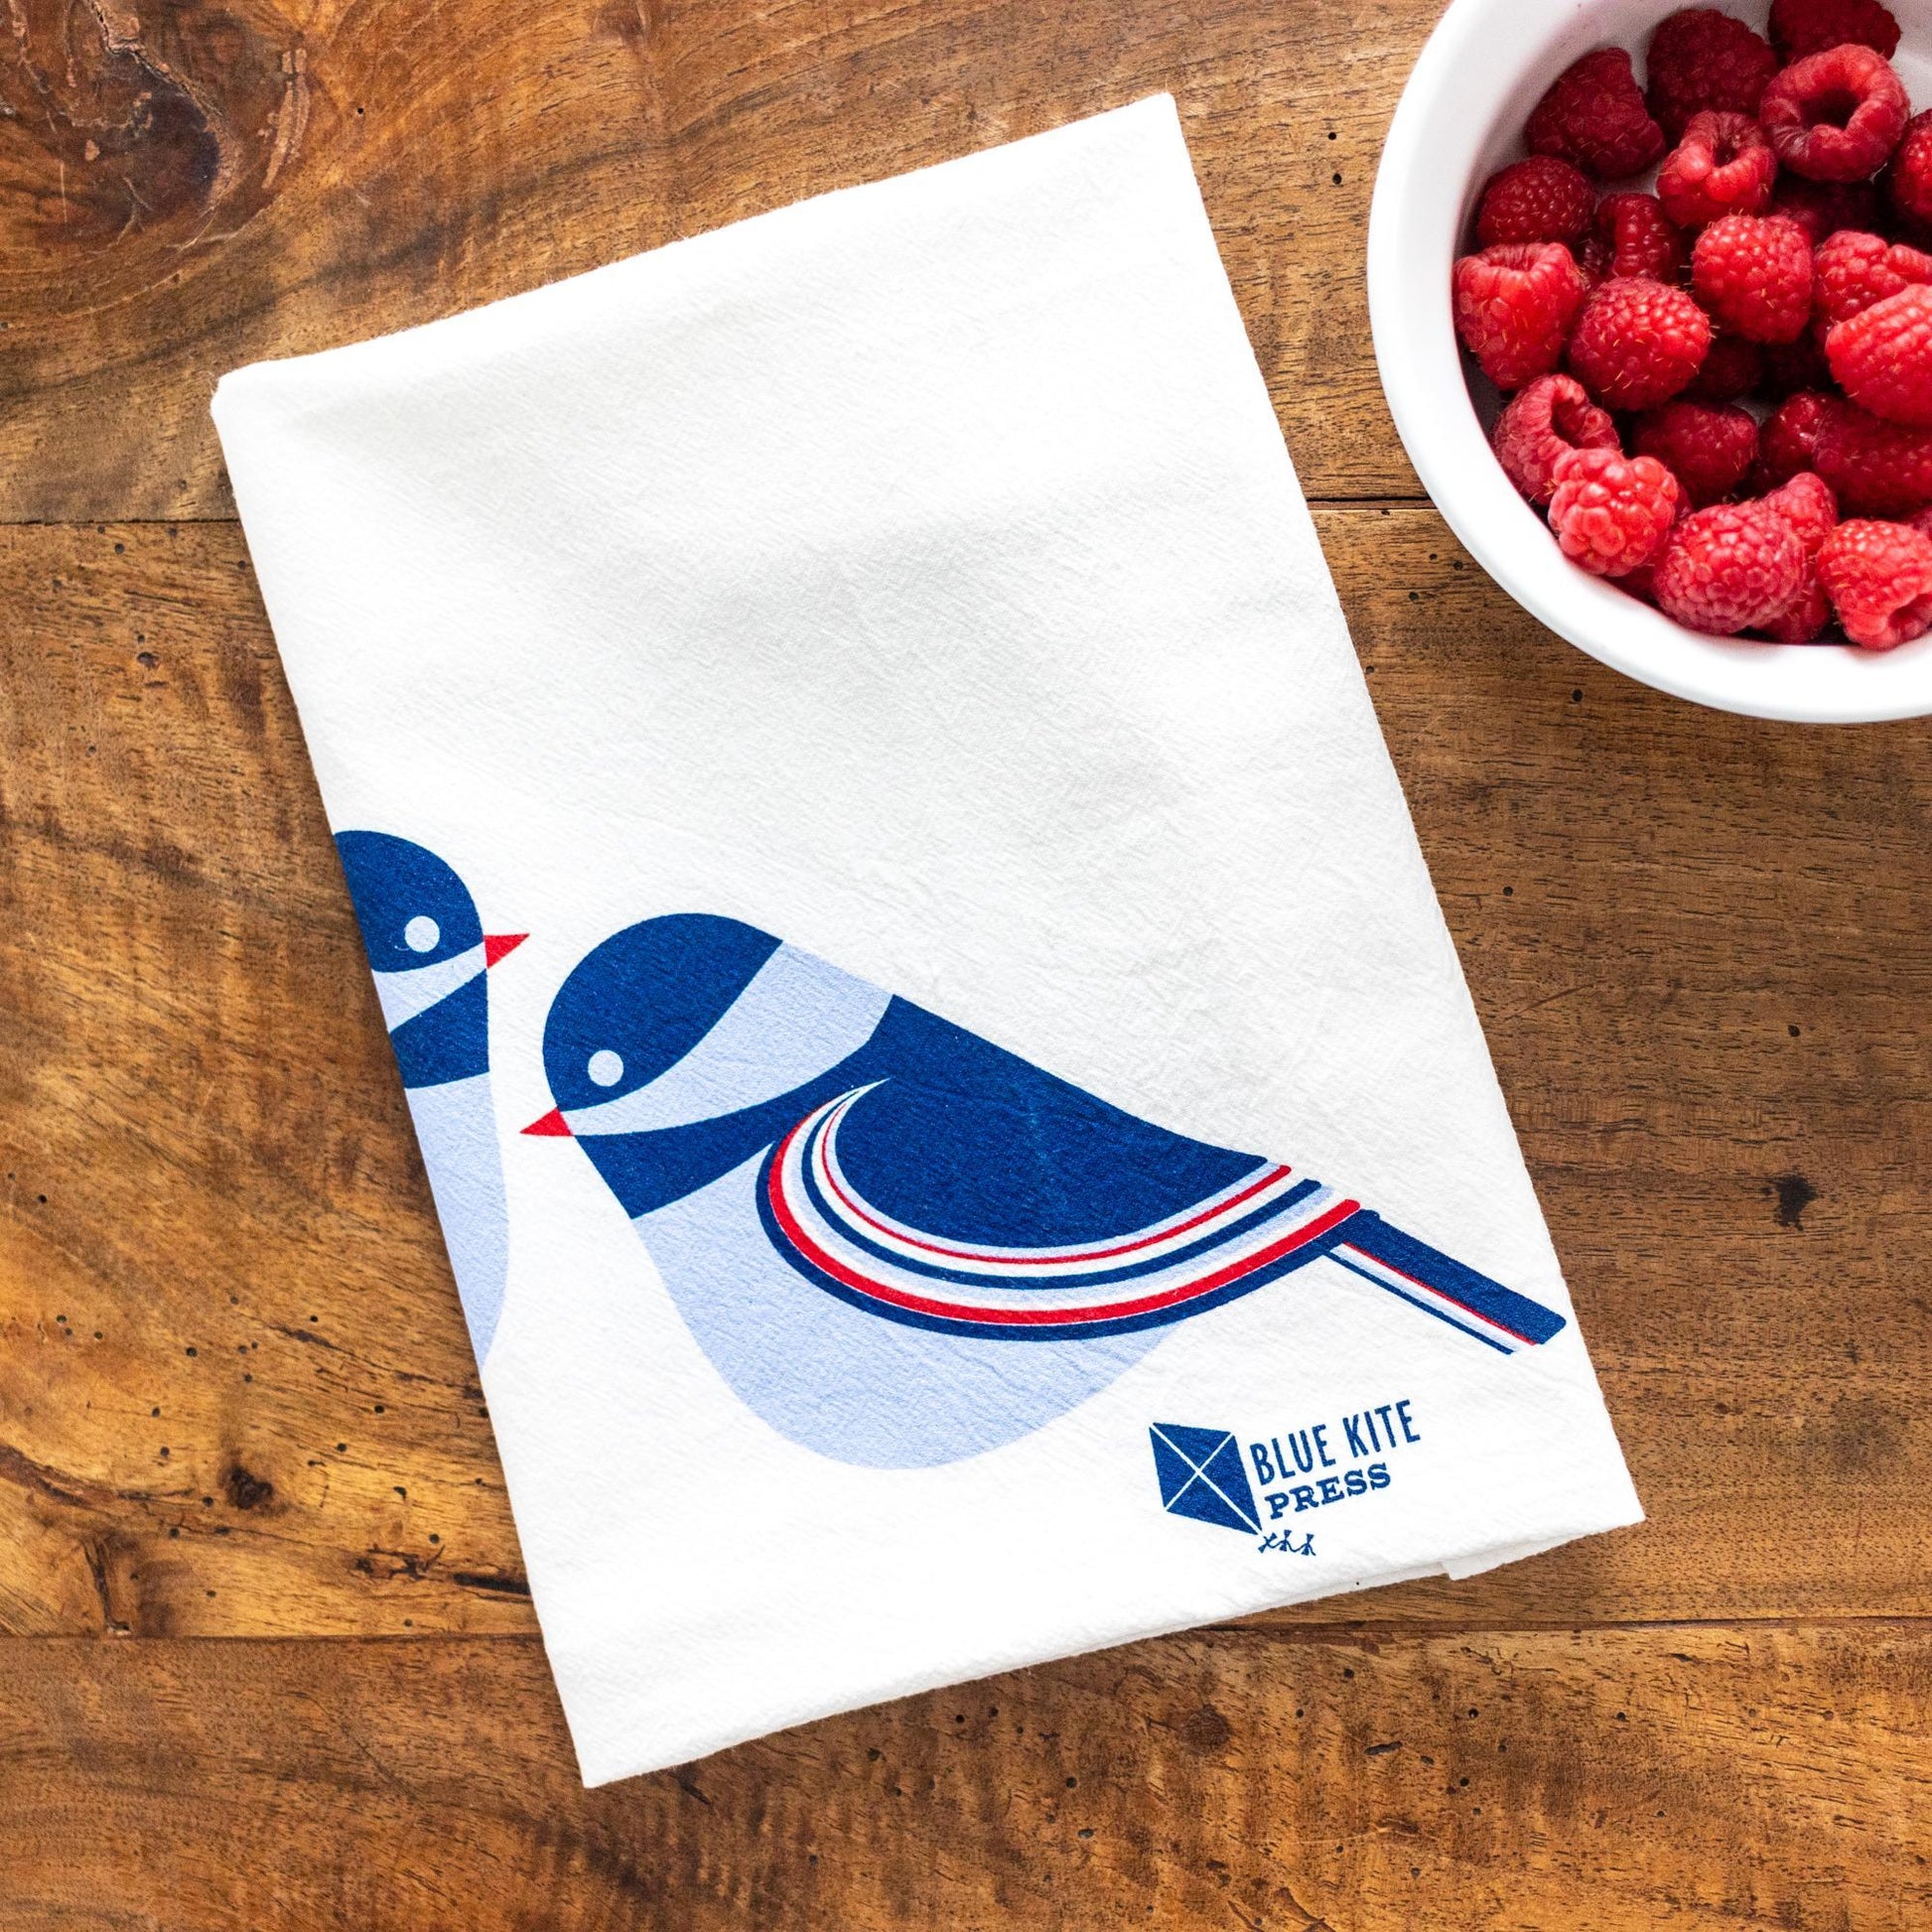 Chickadee Tea Towel in White Flour Sack - Blue Kite Press